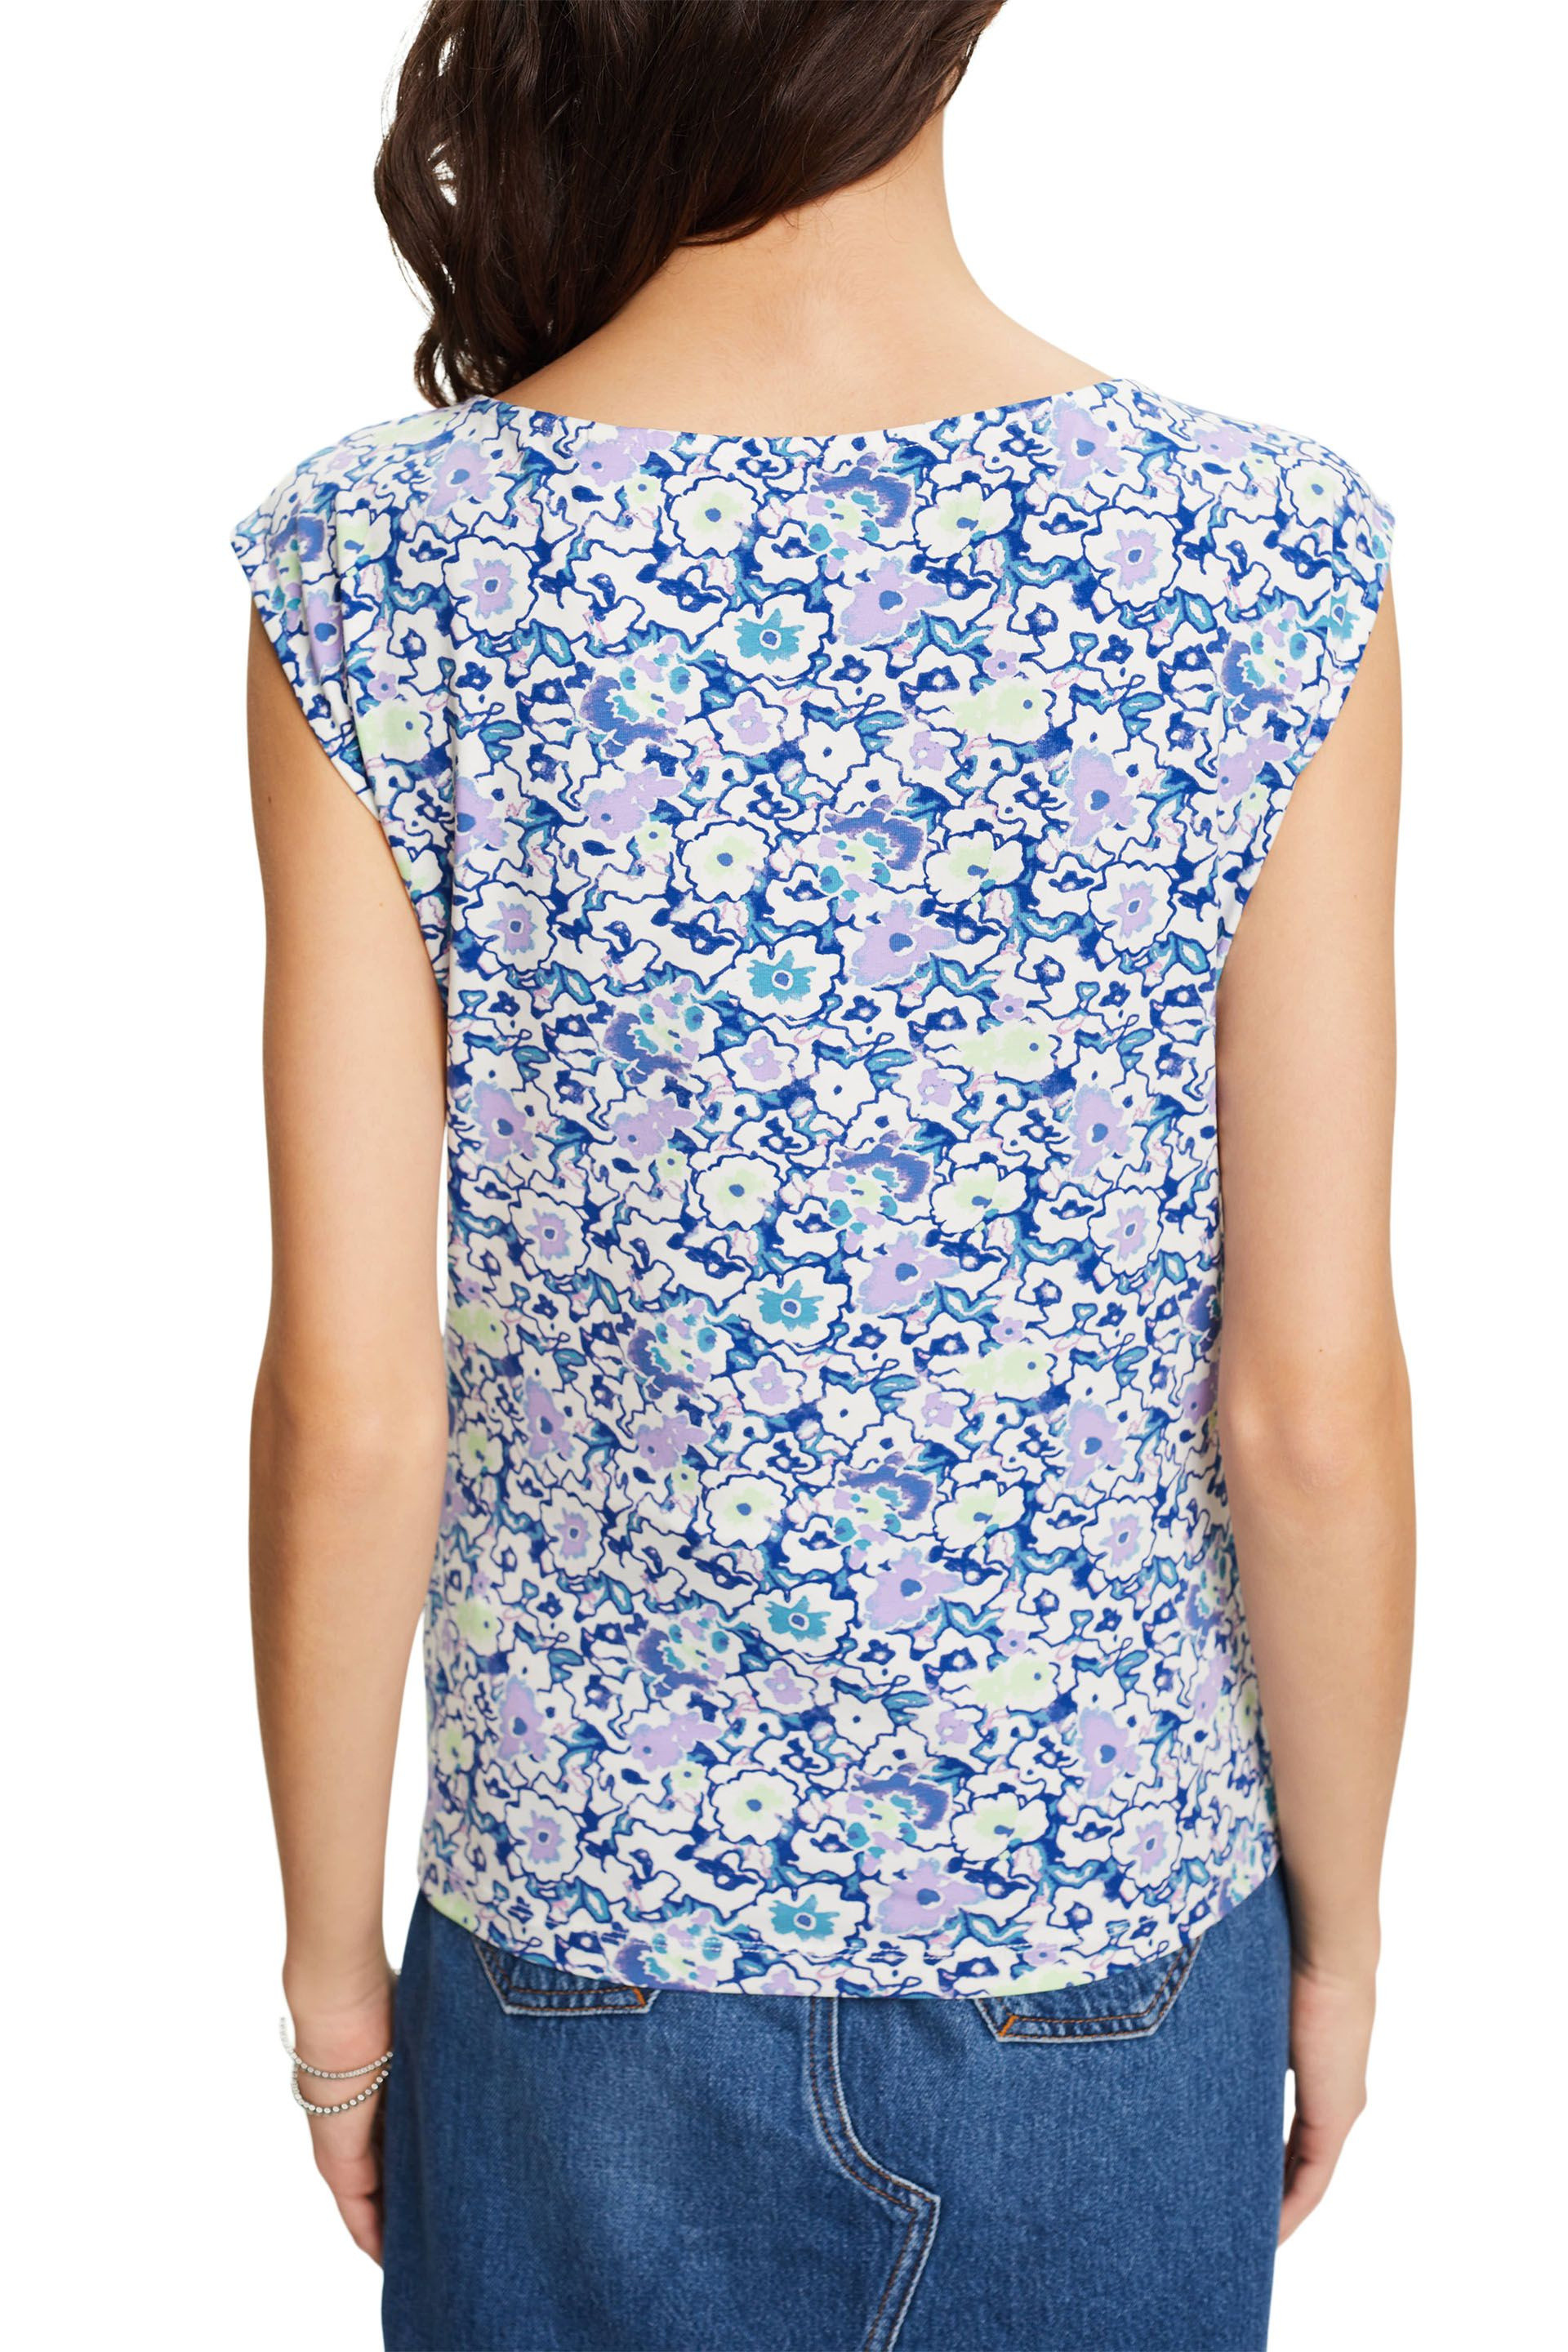 Esprit - T-shirt con stampa floreale, Blu, large image number 3